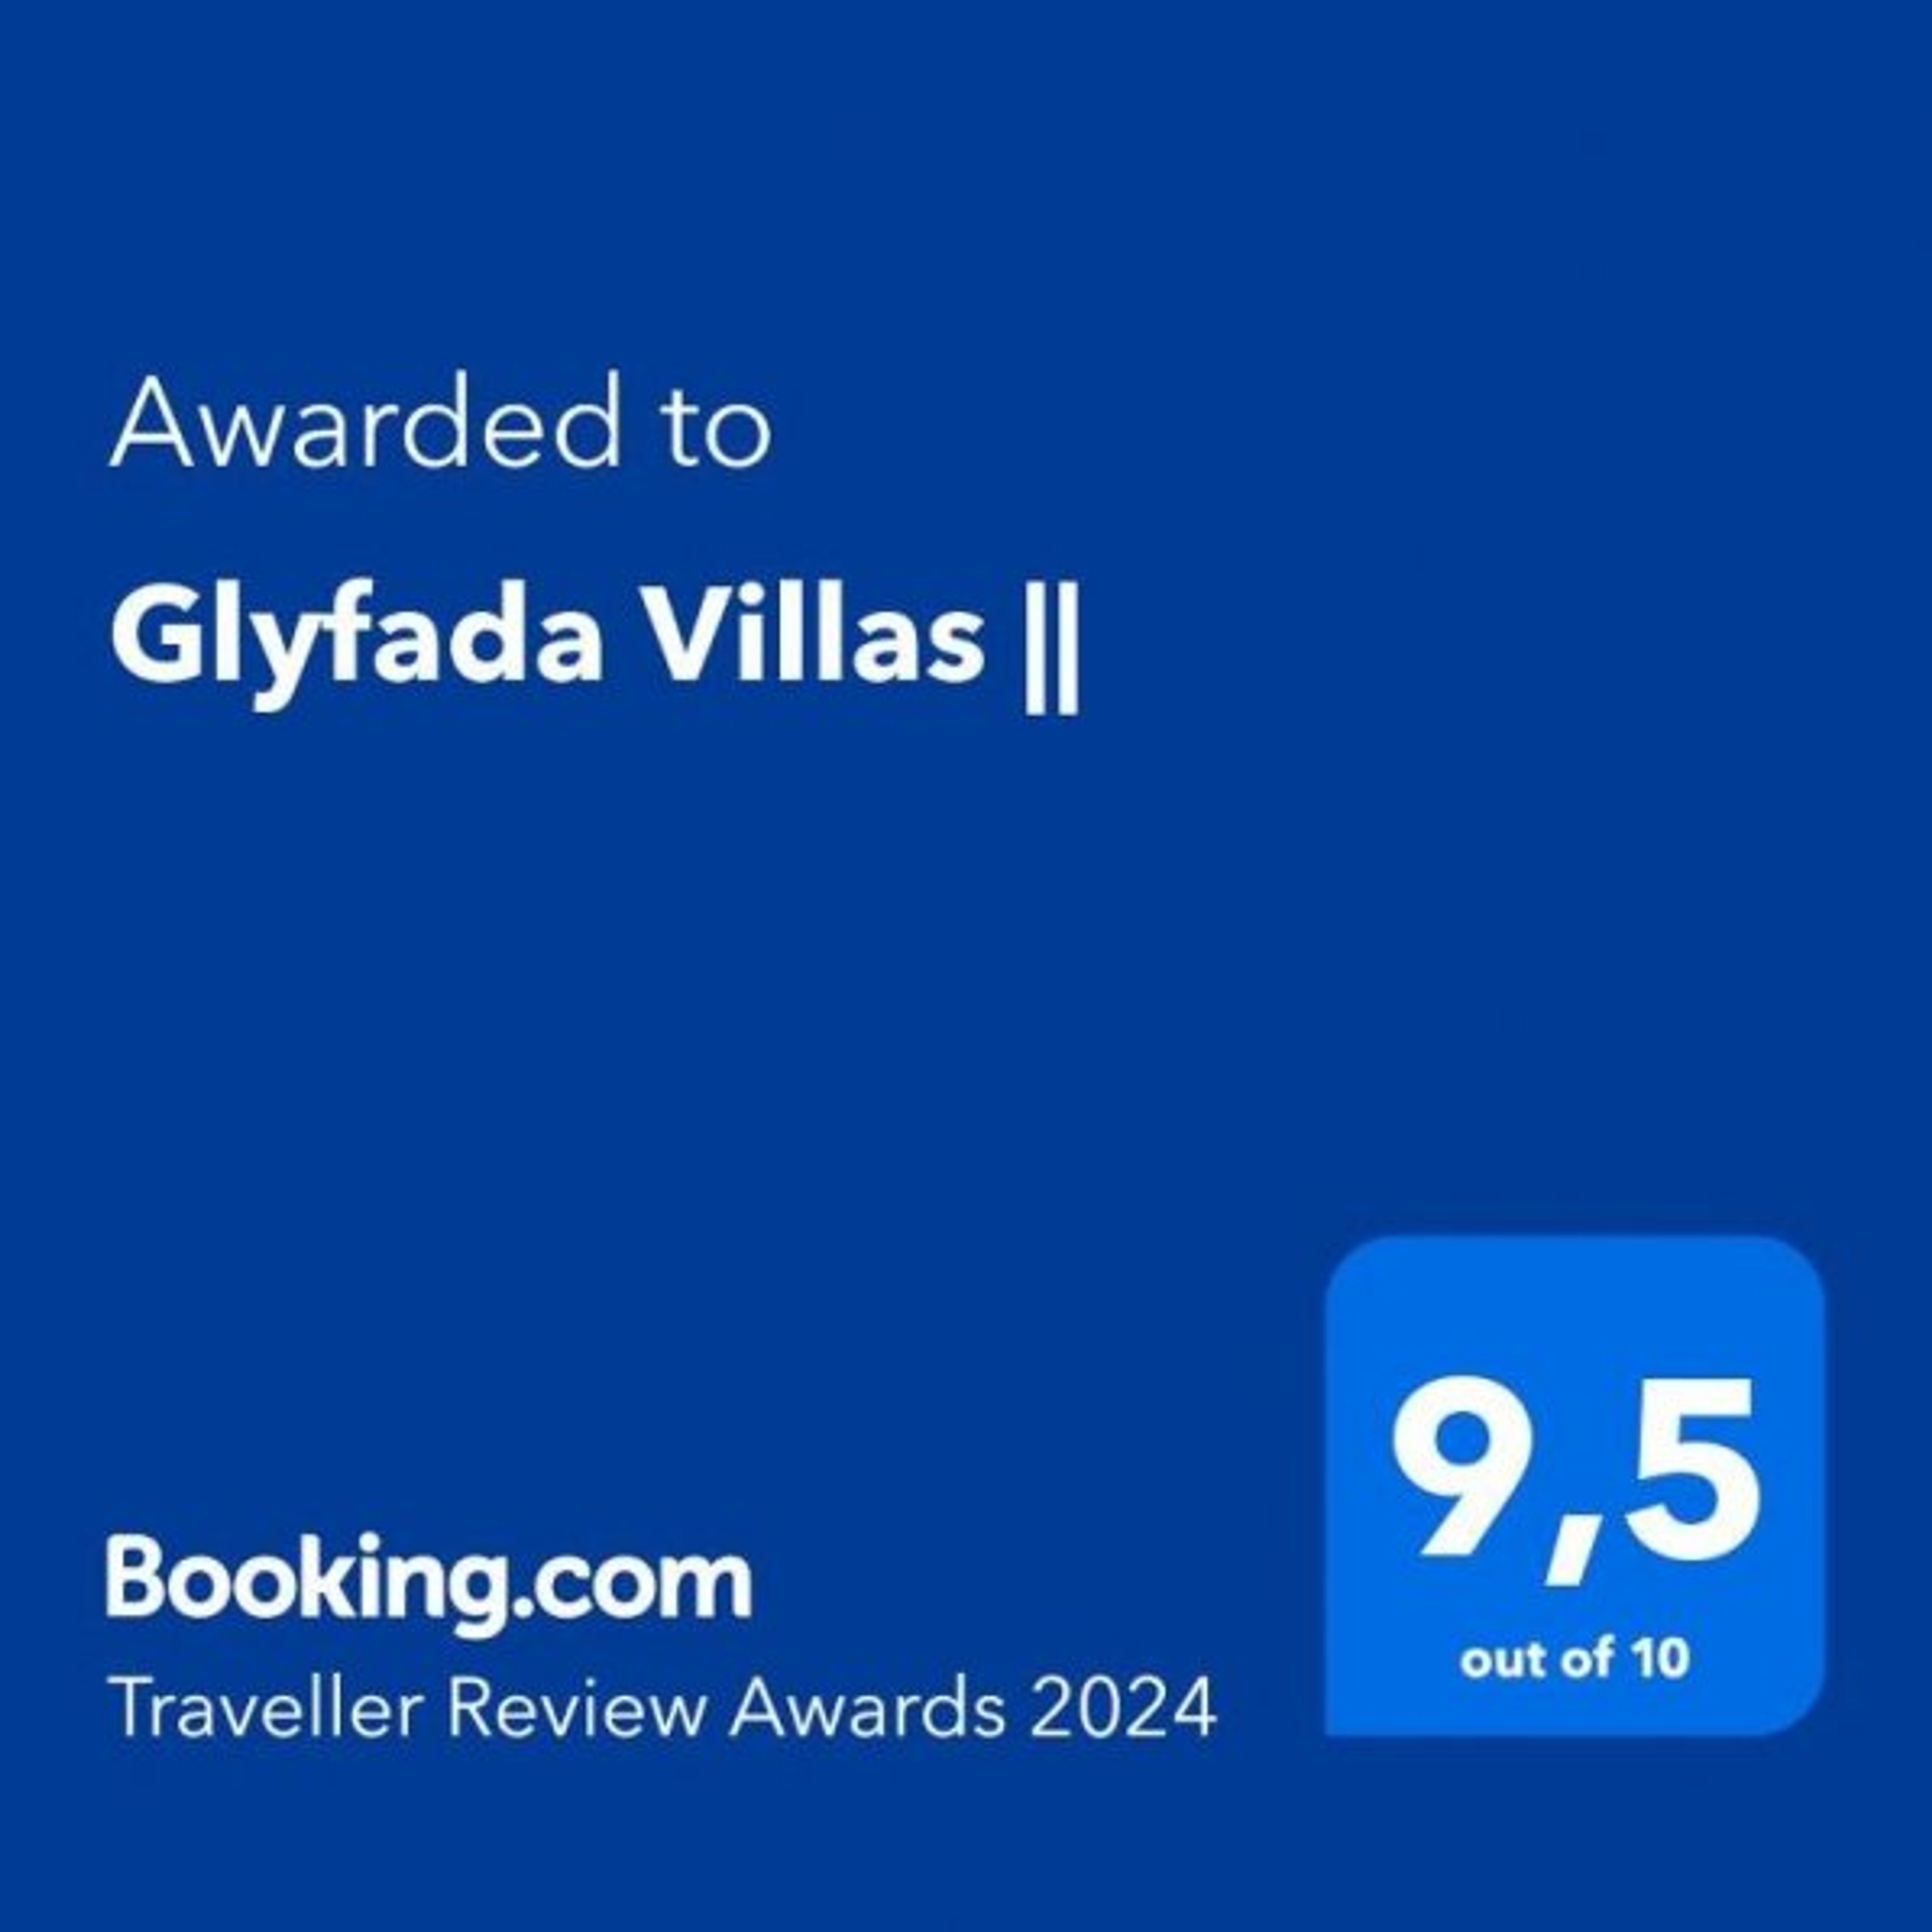 glyfadavillas.bed-booking.com
+306907261667
glyfadavillas@gmail.com